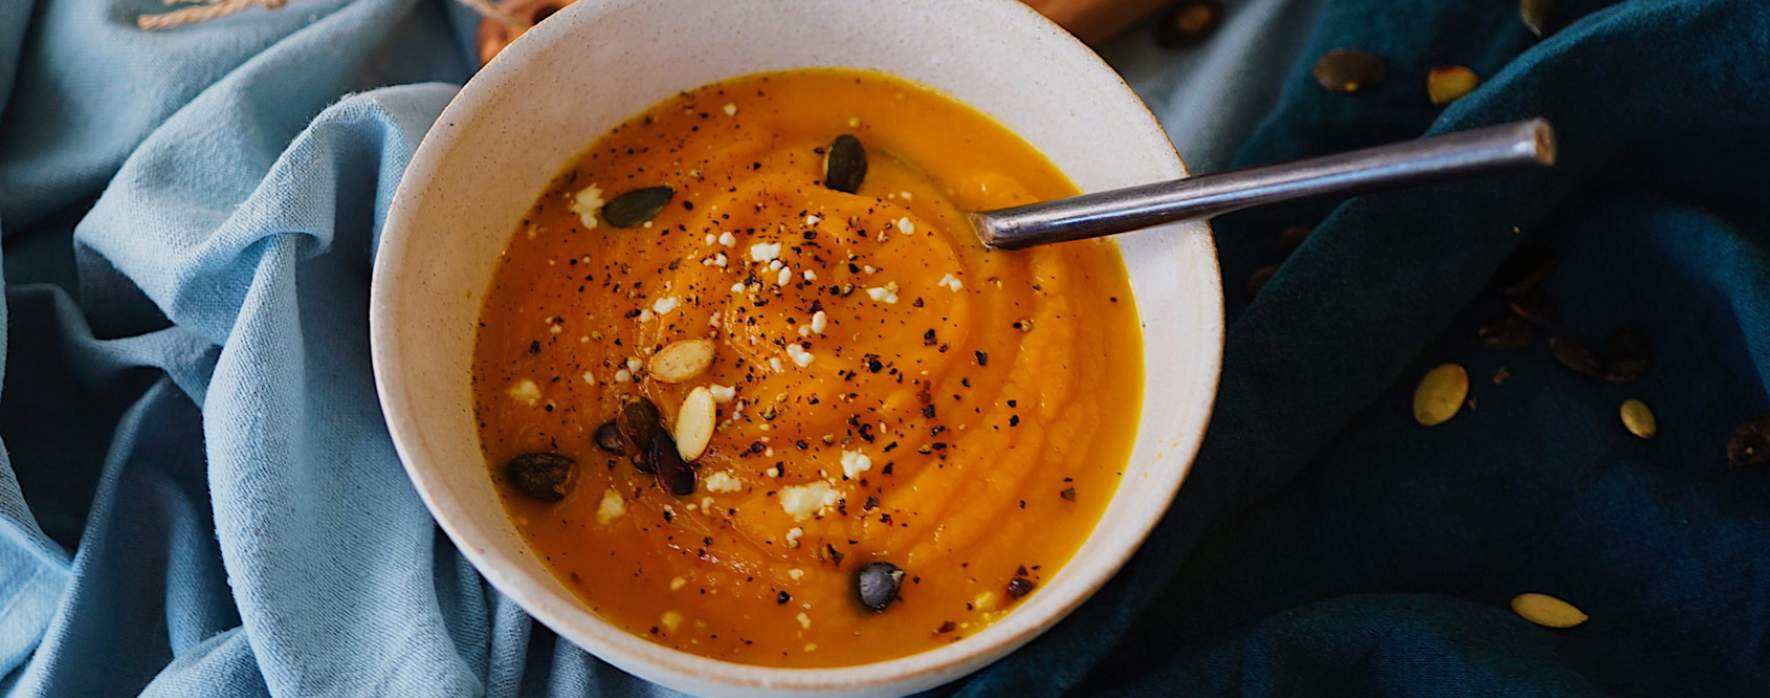 How to make pumpkin soup